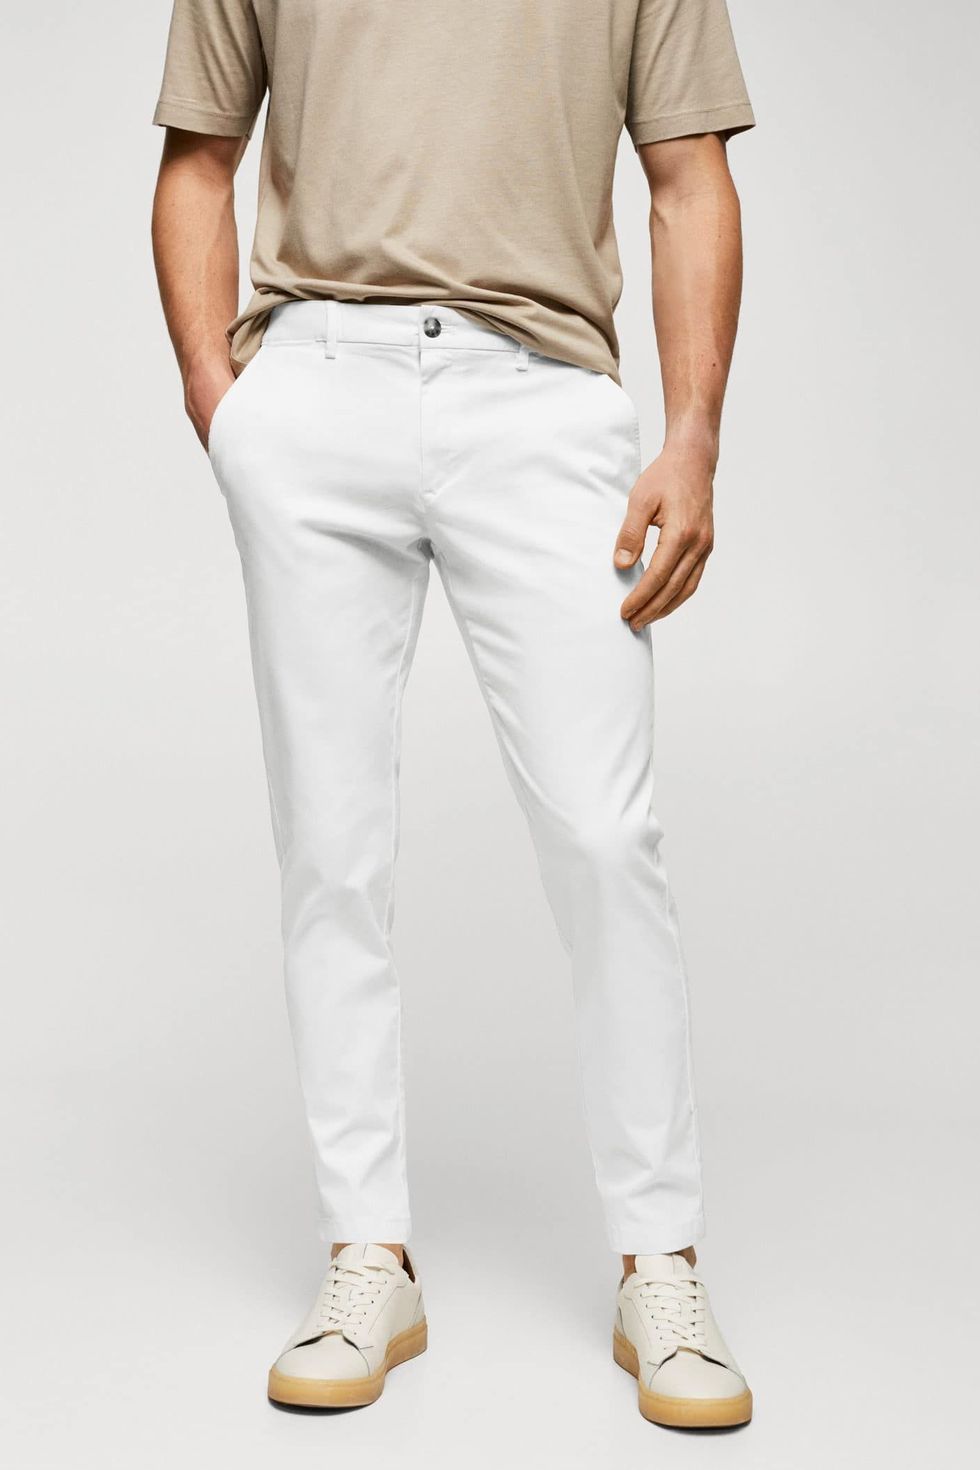 Pantalon Blanco Hombre